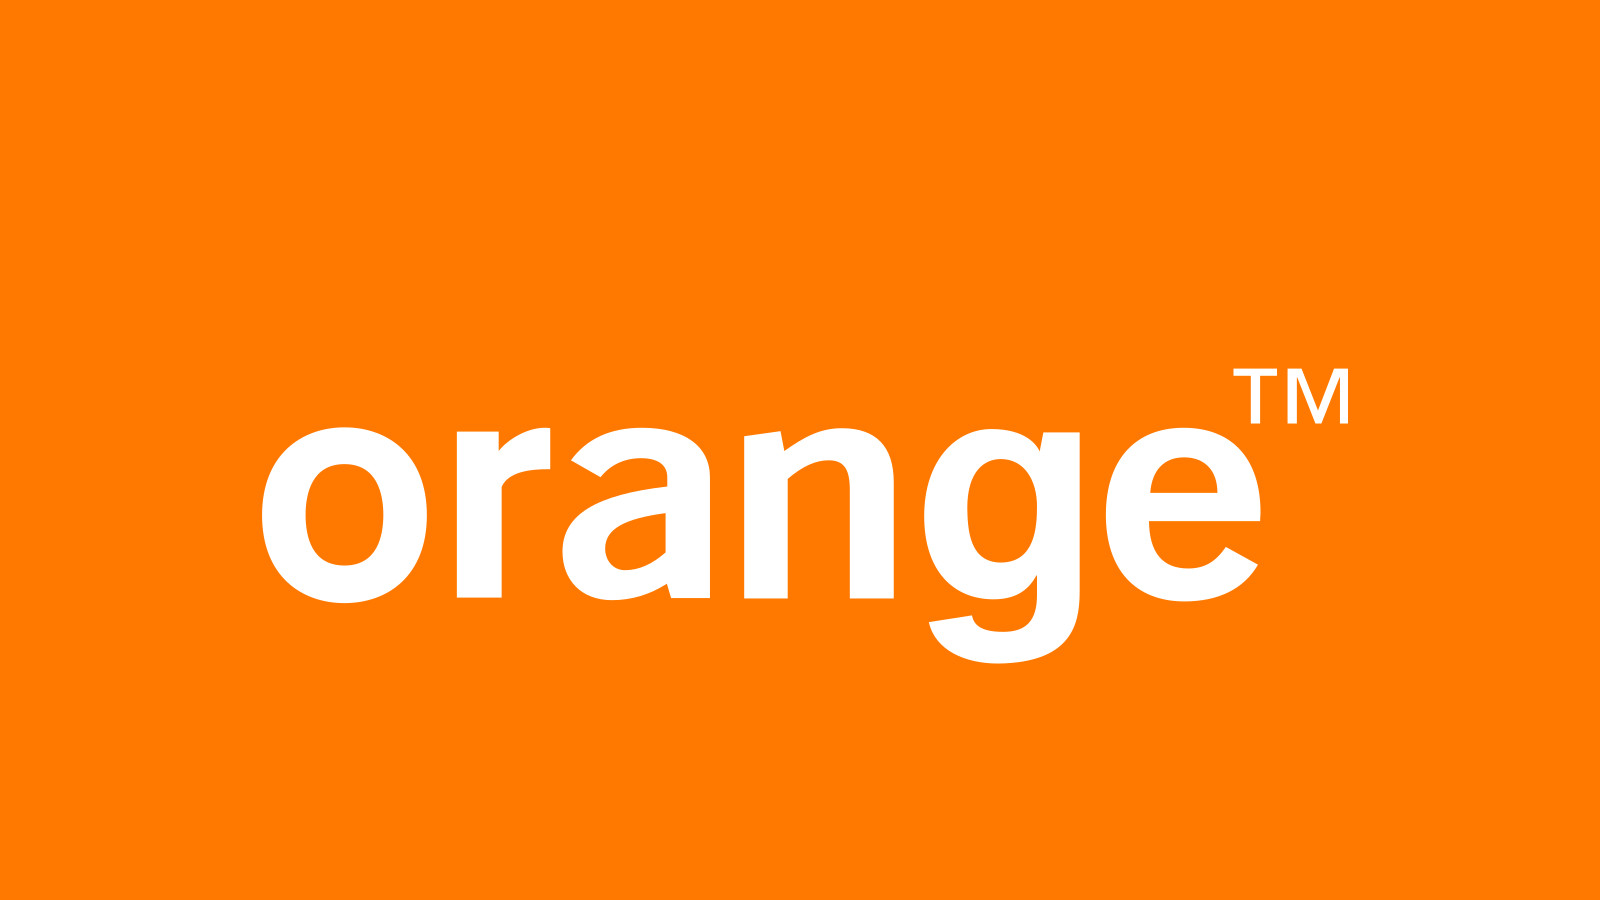 Orange €30 Mobile Top-up ES